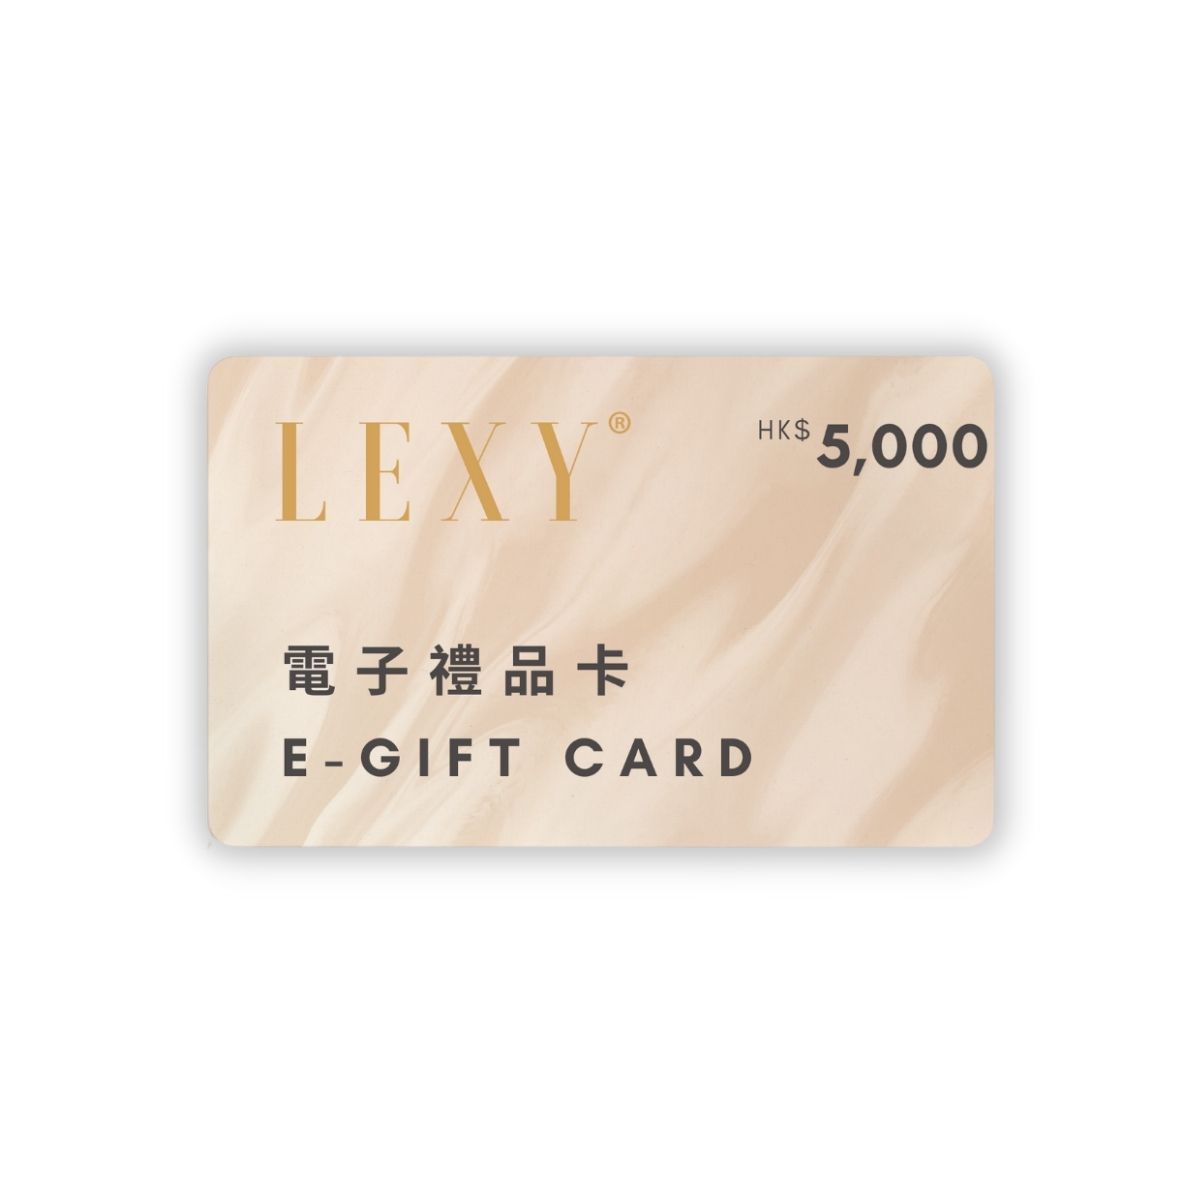 LEXY ® LEXY ® e-Gift Cards 電子禮品卡 Gift Cards HK$5,000.00 購買